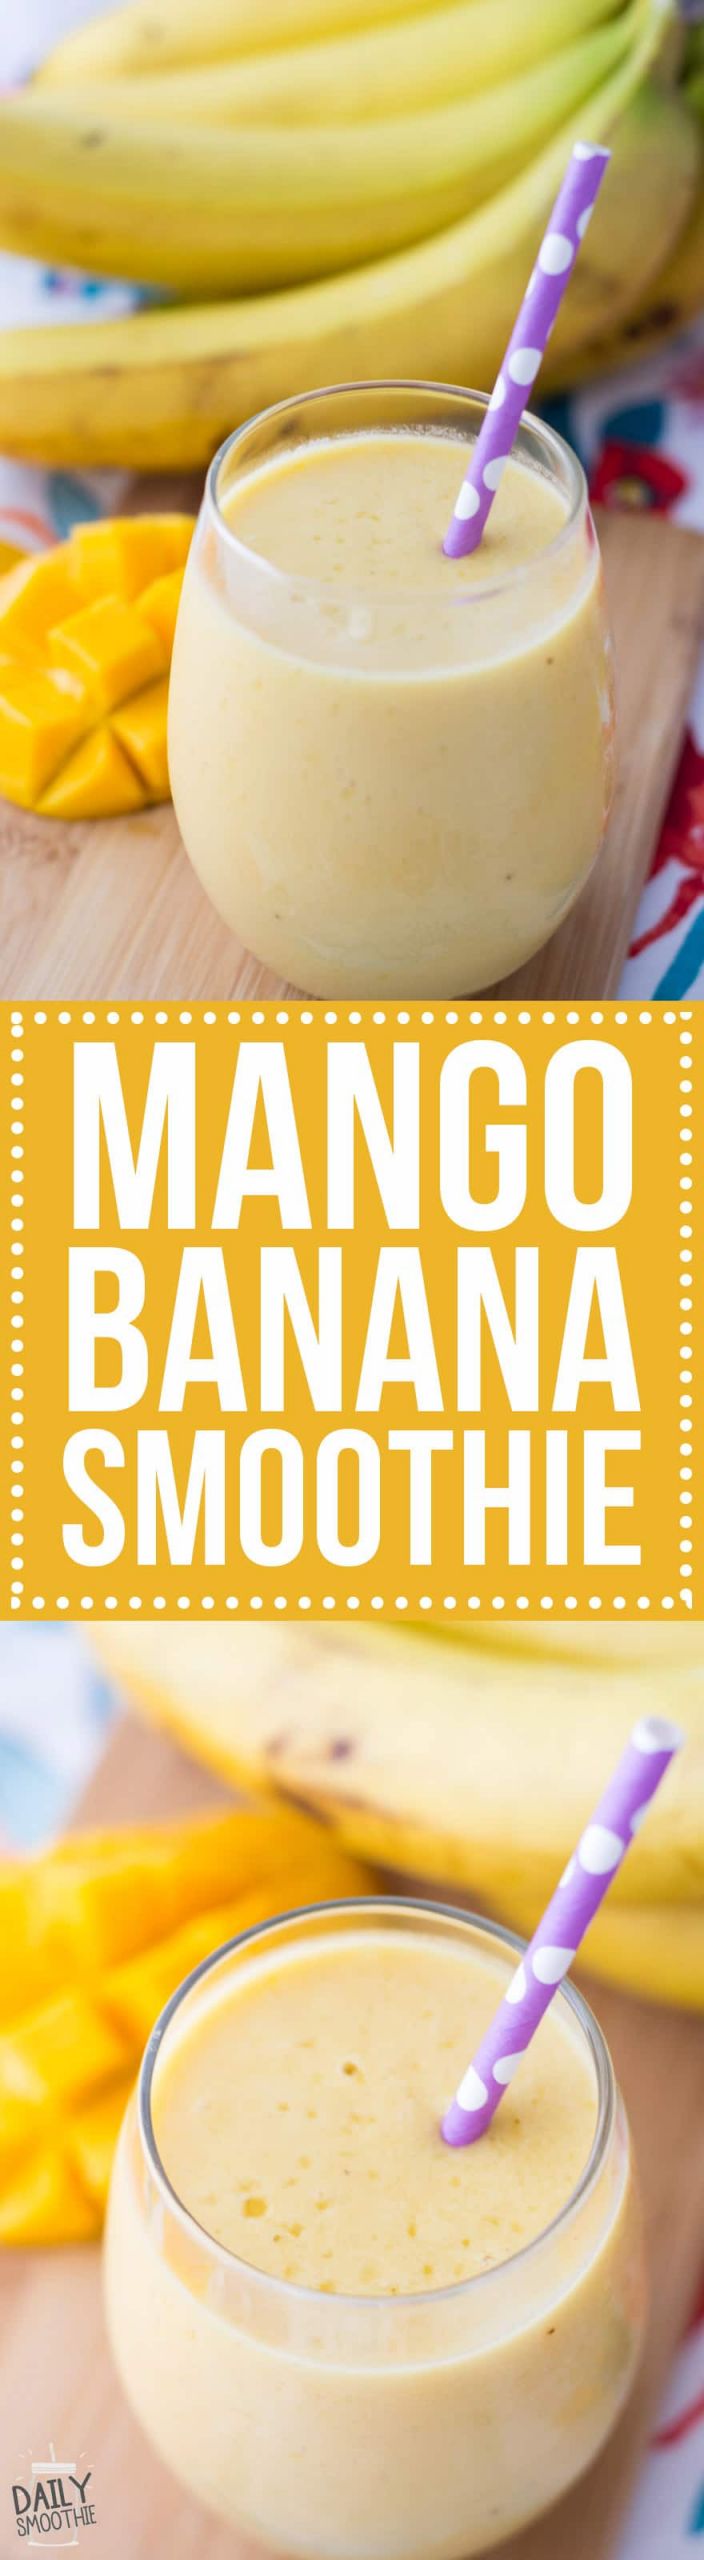 Mango Banana Smoothie Recipes
 4 Ingre nt Mango Banana Smoothie A Healthy Tropical Drink